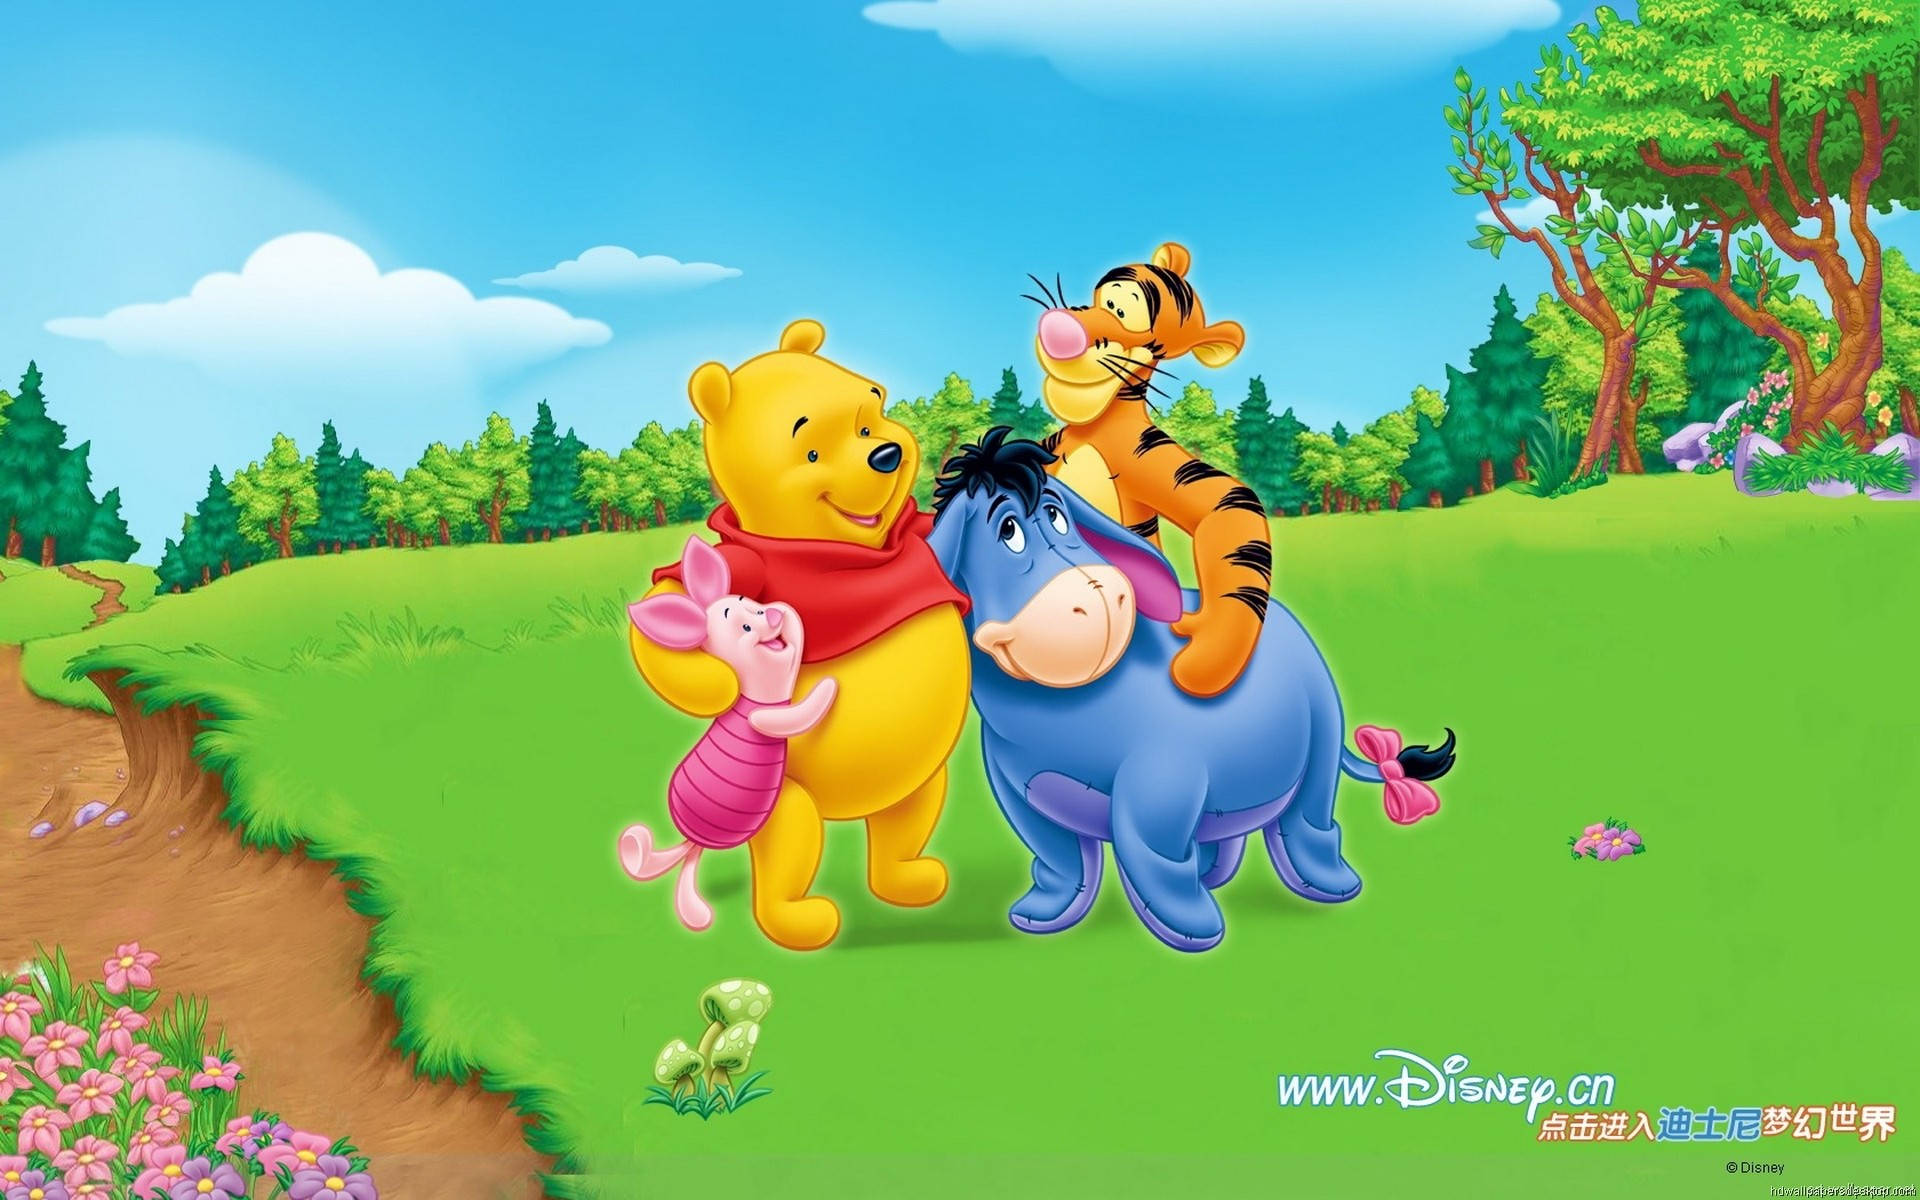 Top 999+ Disney Winnie The Pooh Wallpaper Full HD, 4K✅Free to Use